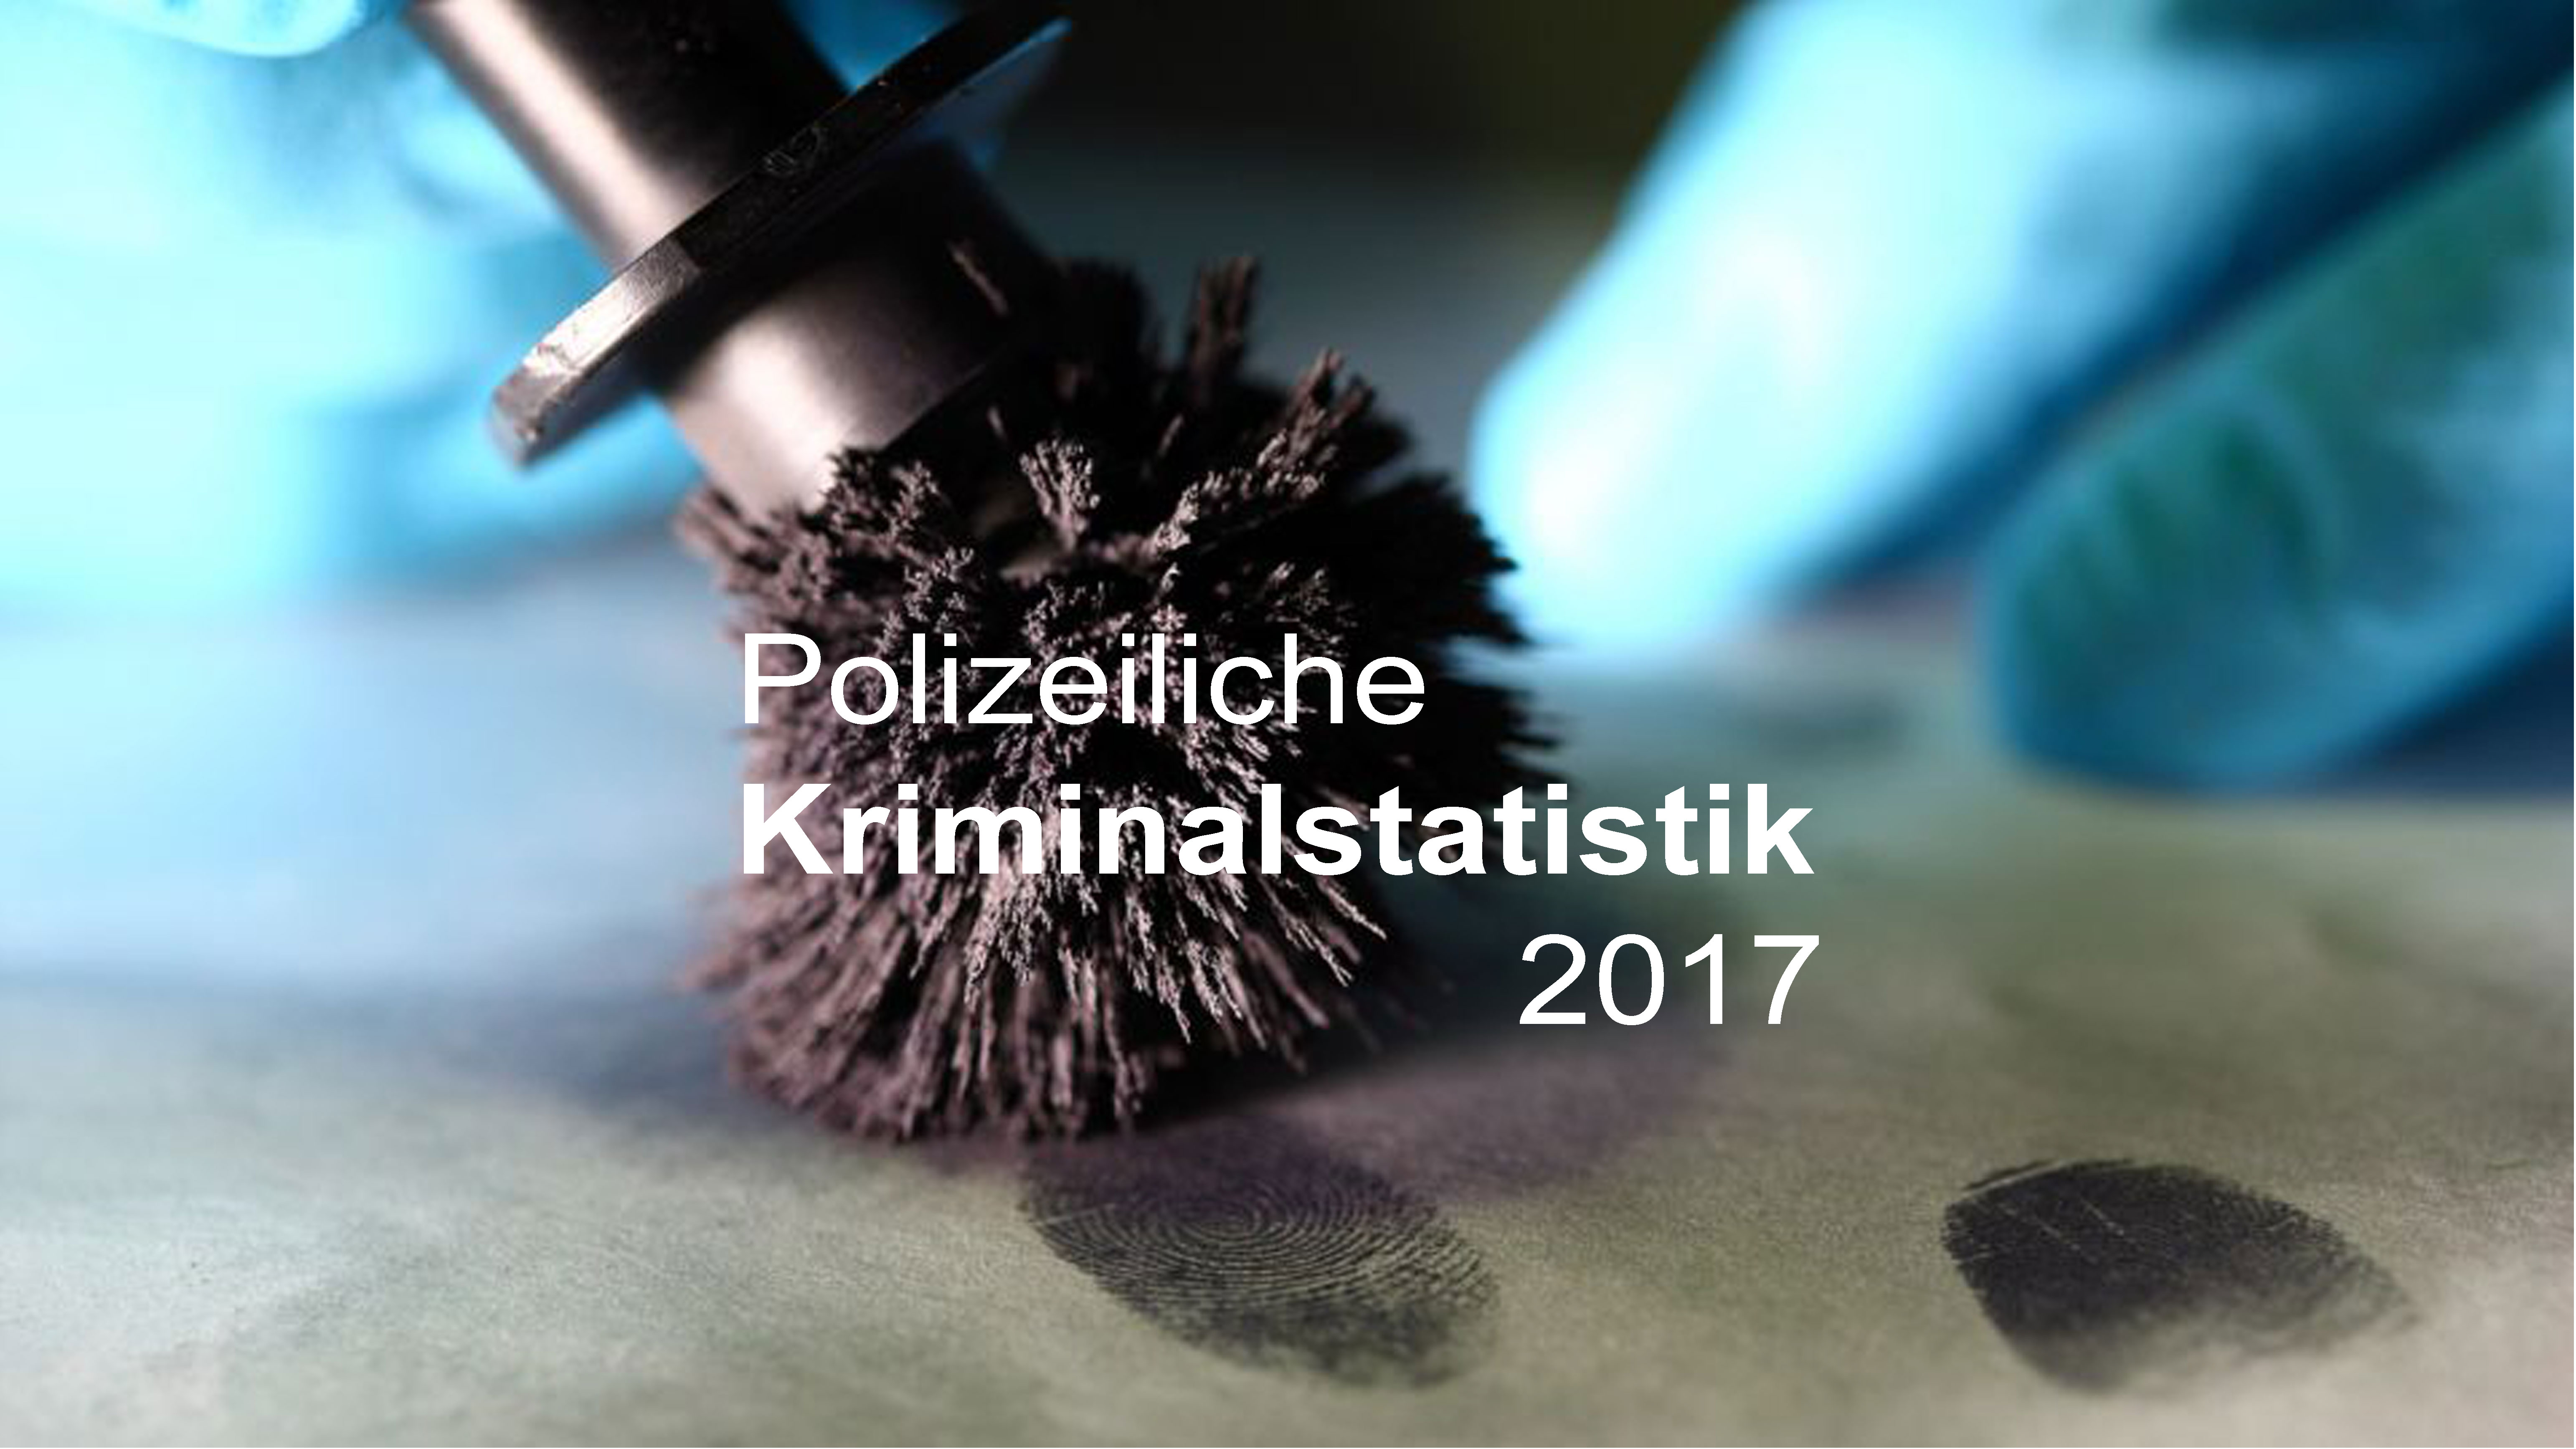 Police crime statistics 2017